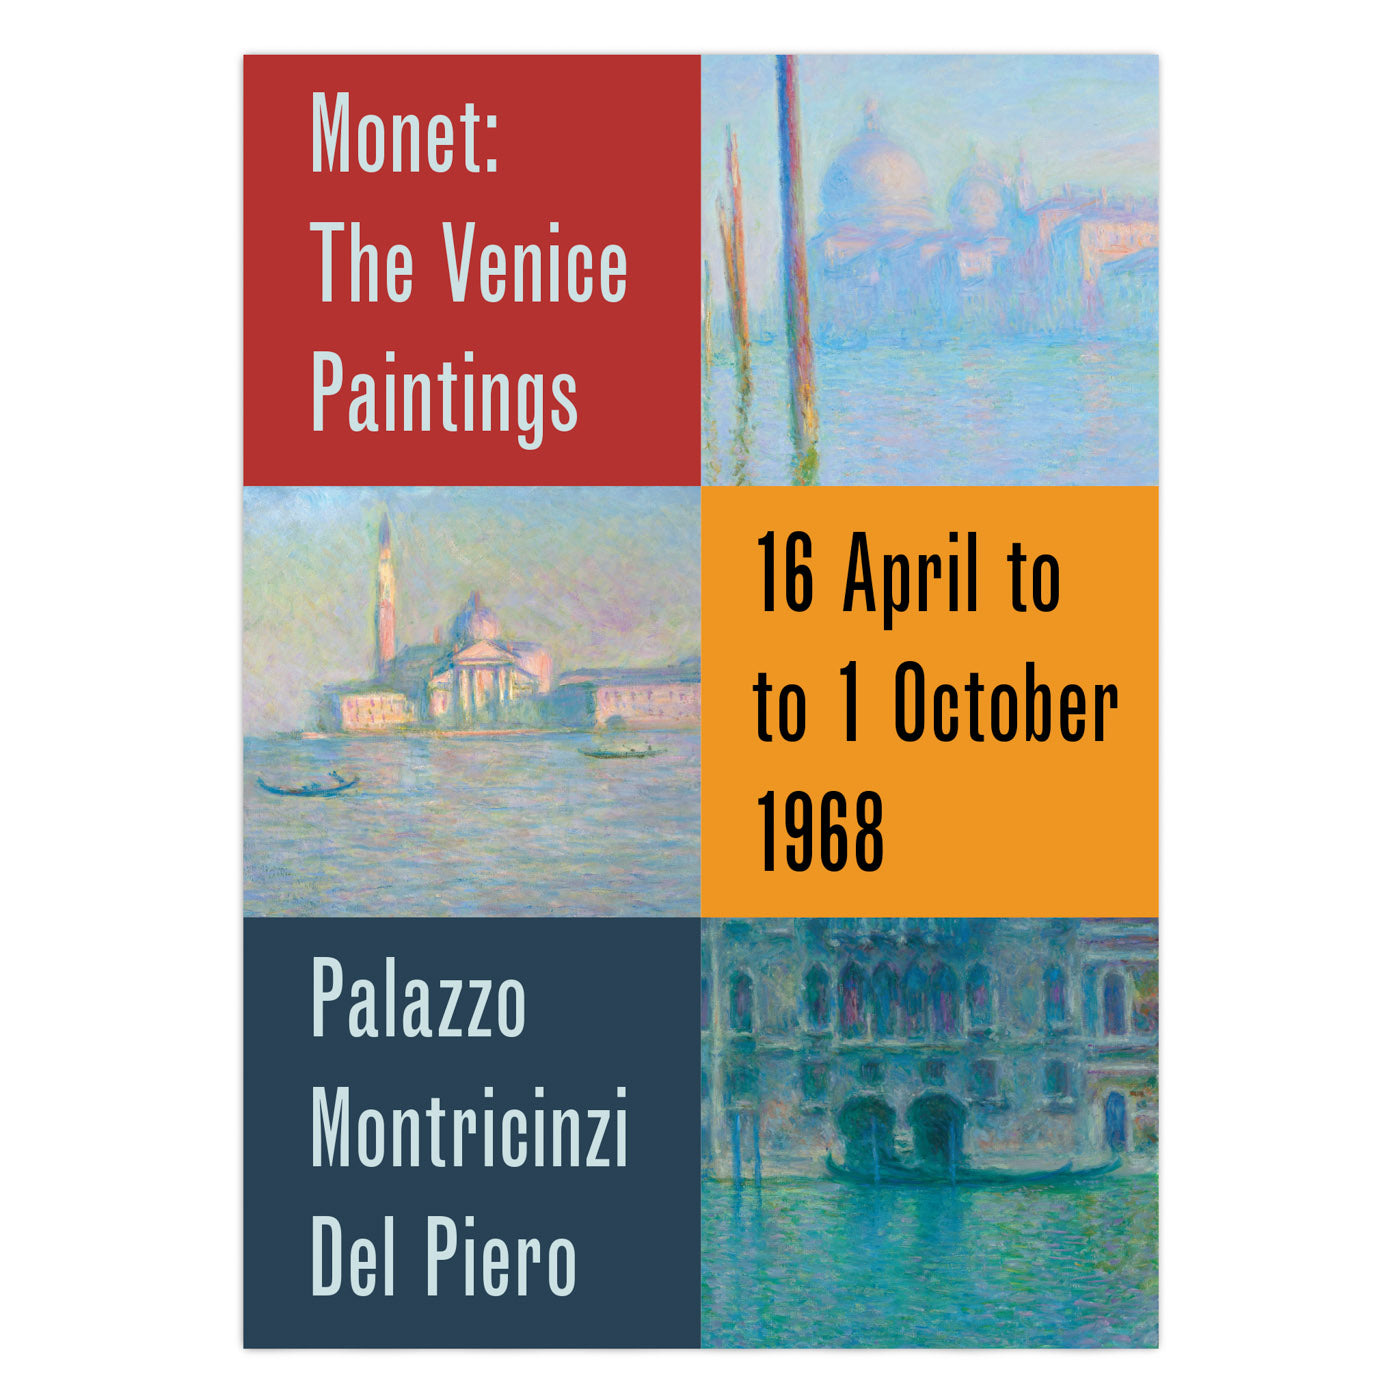 Claude Monet In Venice Exhibition Poster